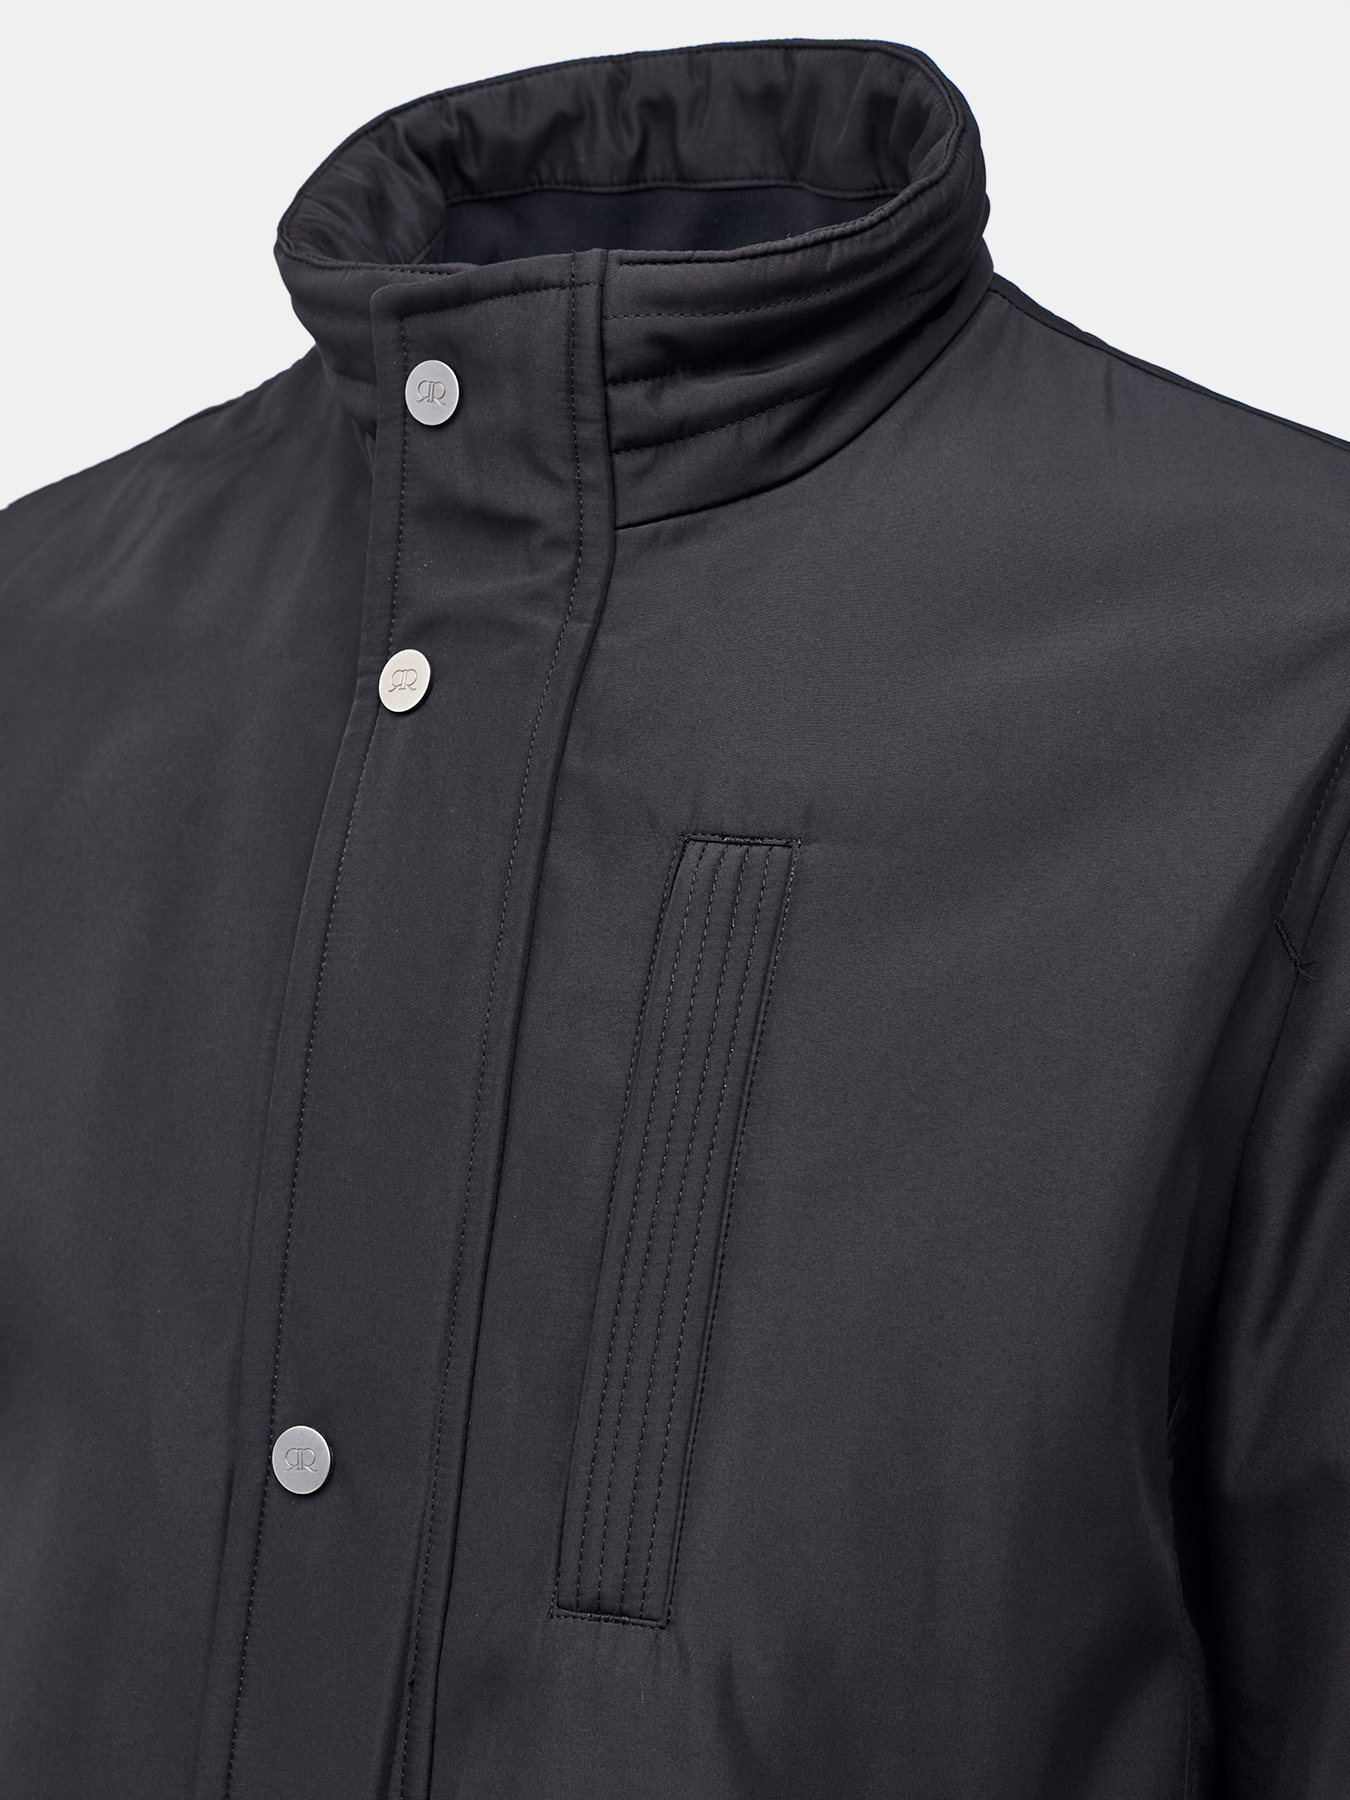 Куртка Ritter 367556-030, цвет черный, размер 58 - фото 2